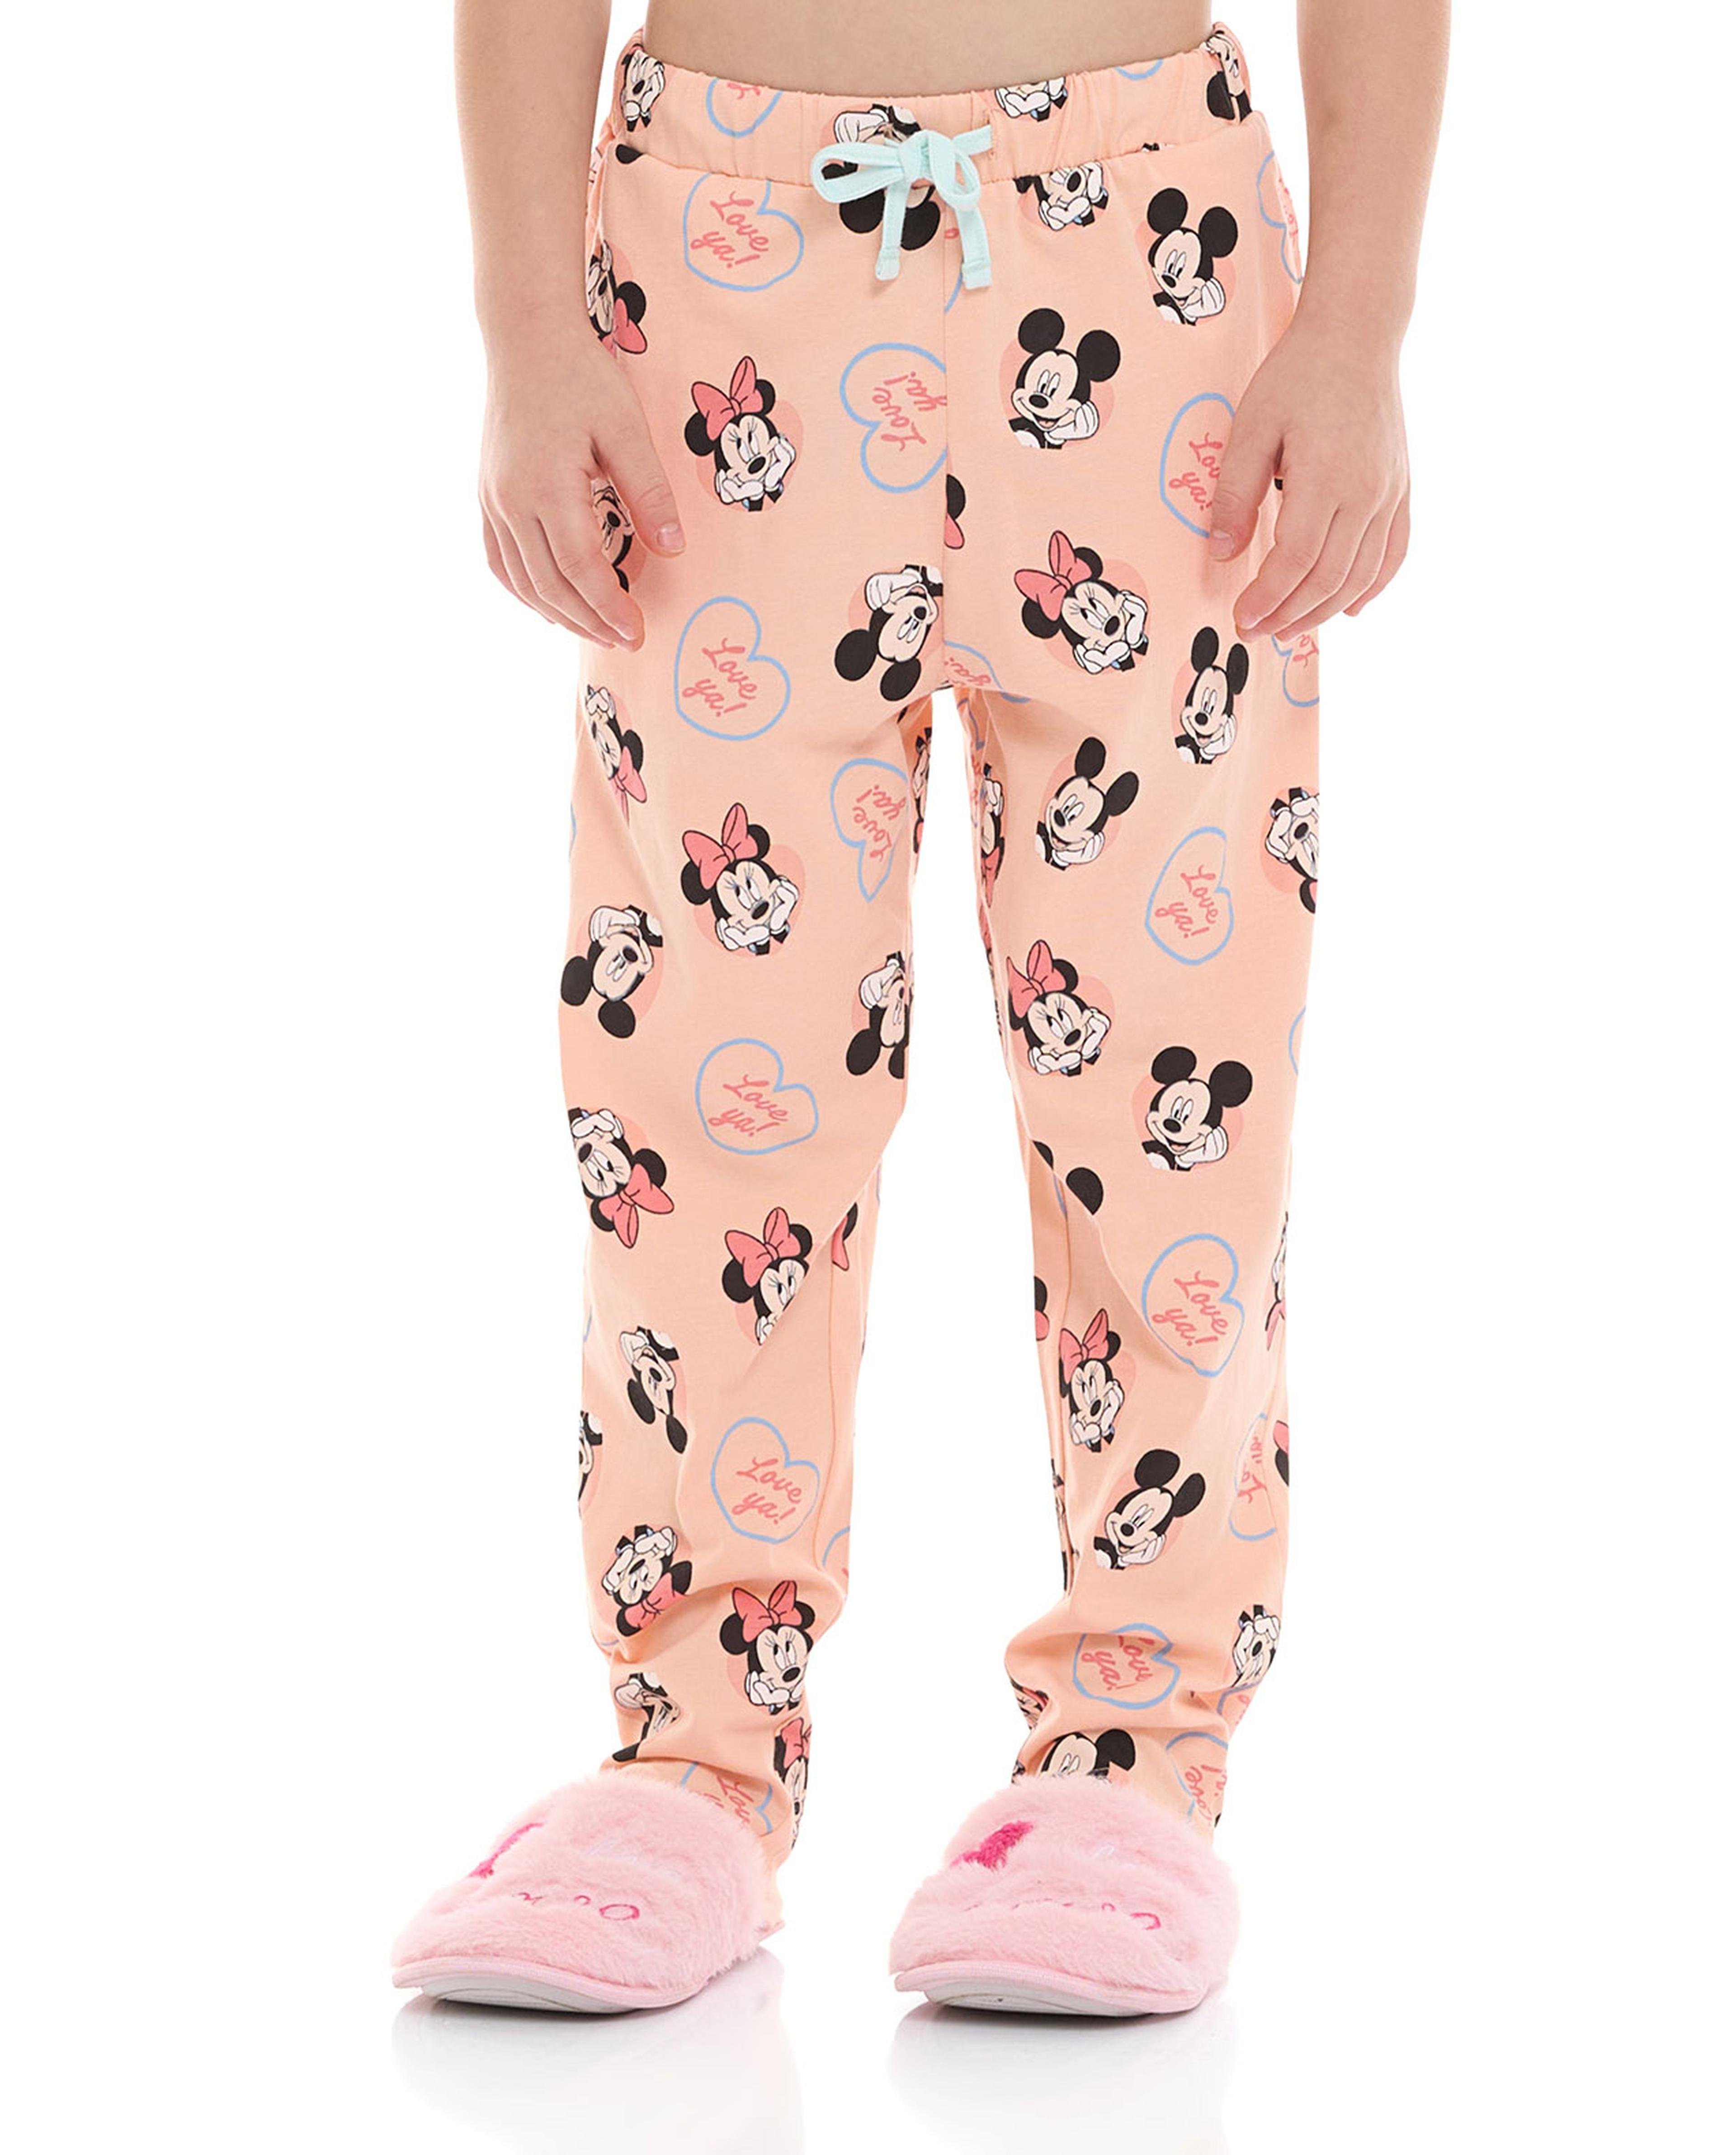 Minnie Mouse Printed Short Sleeves Pajama Set